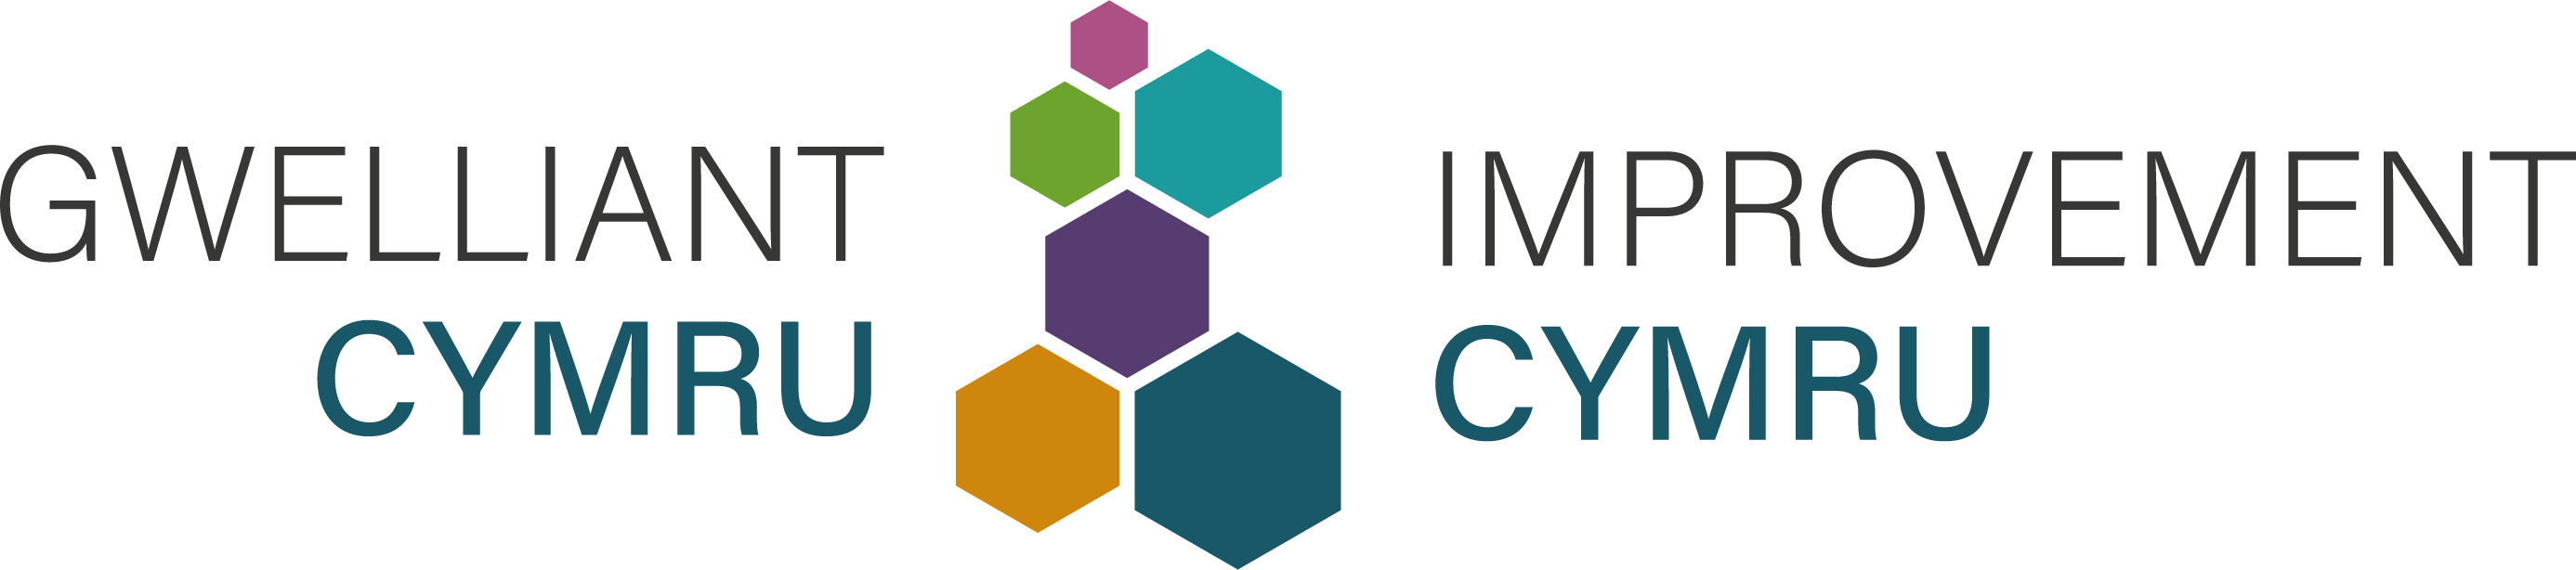 Improvement Cymru logo